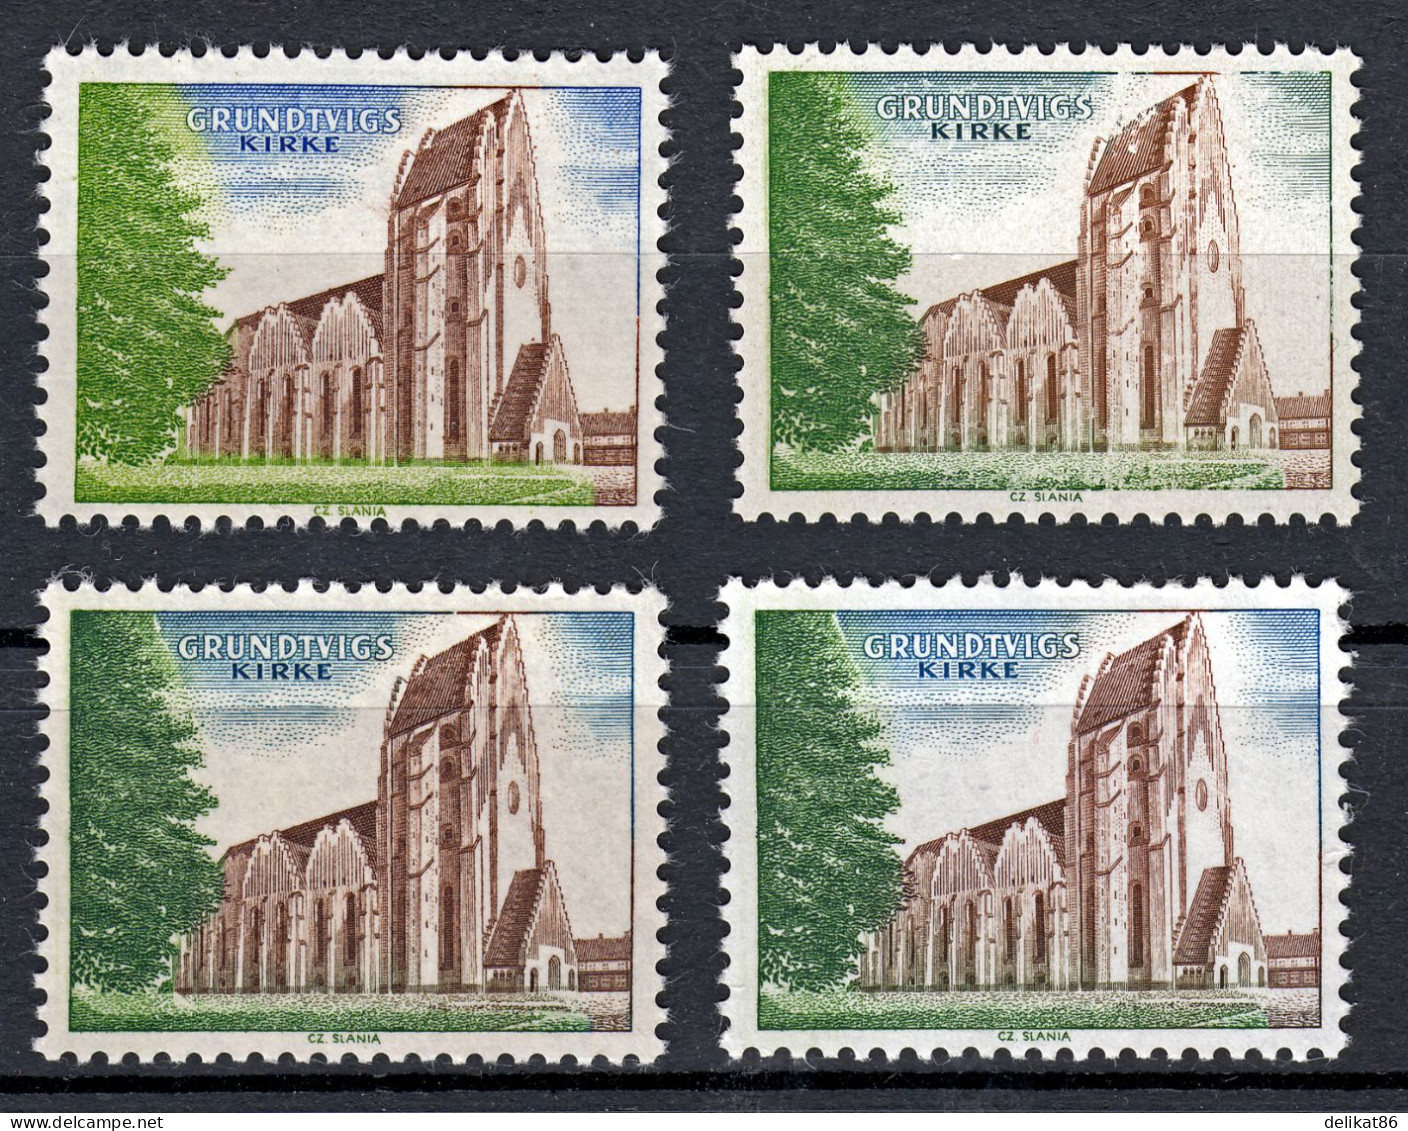 Probedruck Test Stamp Specimen Prøve Grundtvig Kirke Slania 1968   4 Verschiedene Marken - Prove E Ristampe